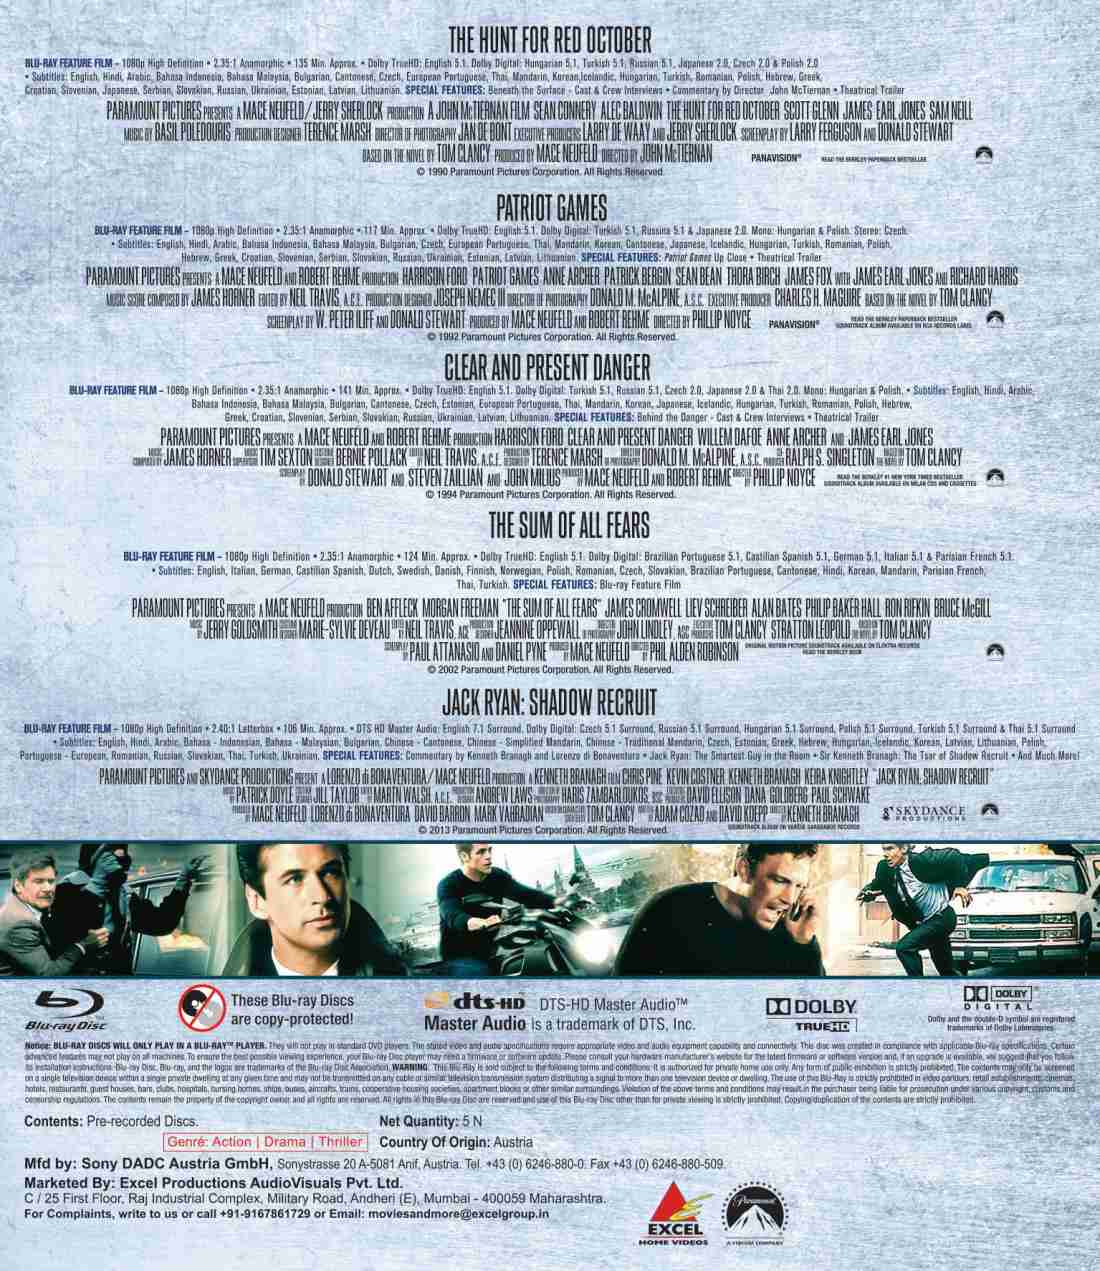  The Jack Ryan Collection [Blu-ray] : Ben Affleck